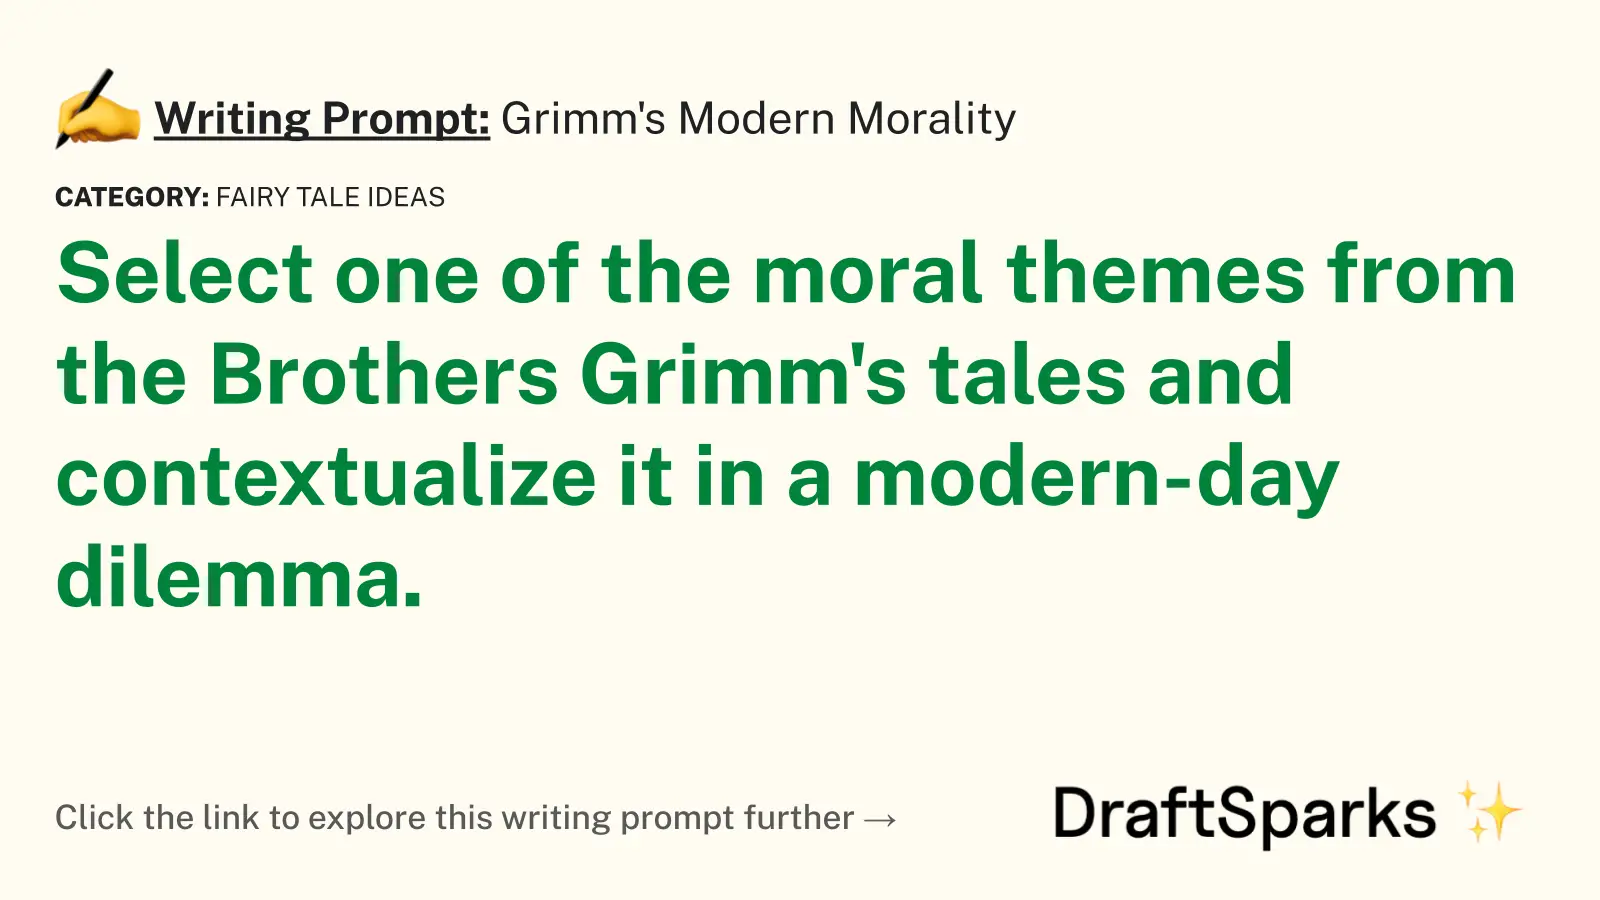 Grimm’s Modern Morality